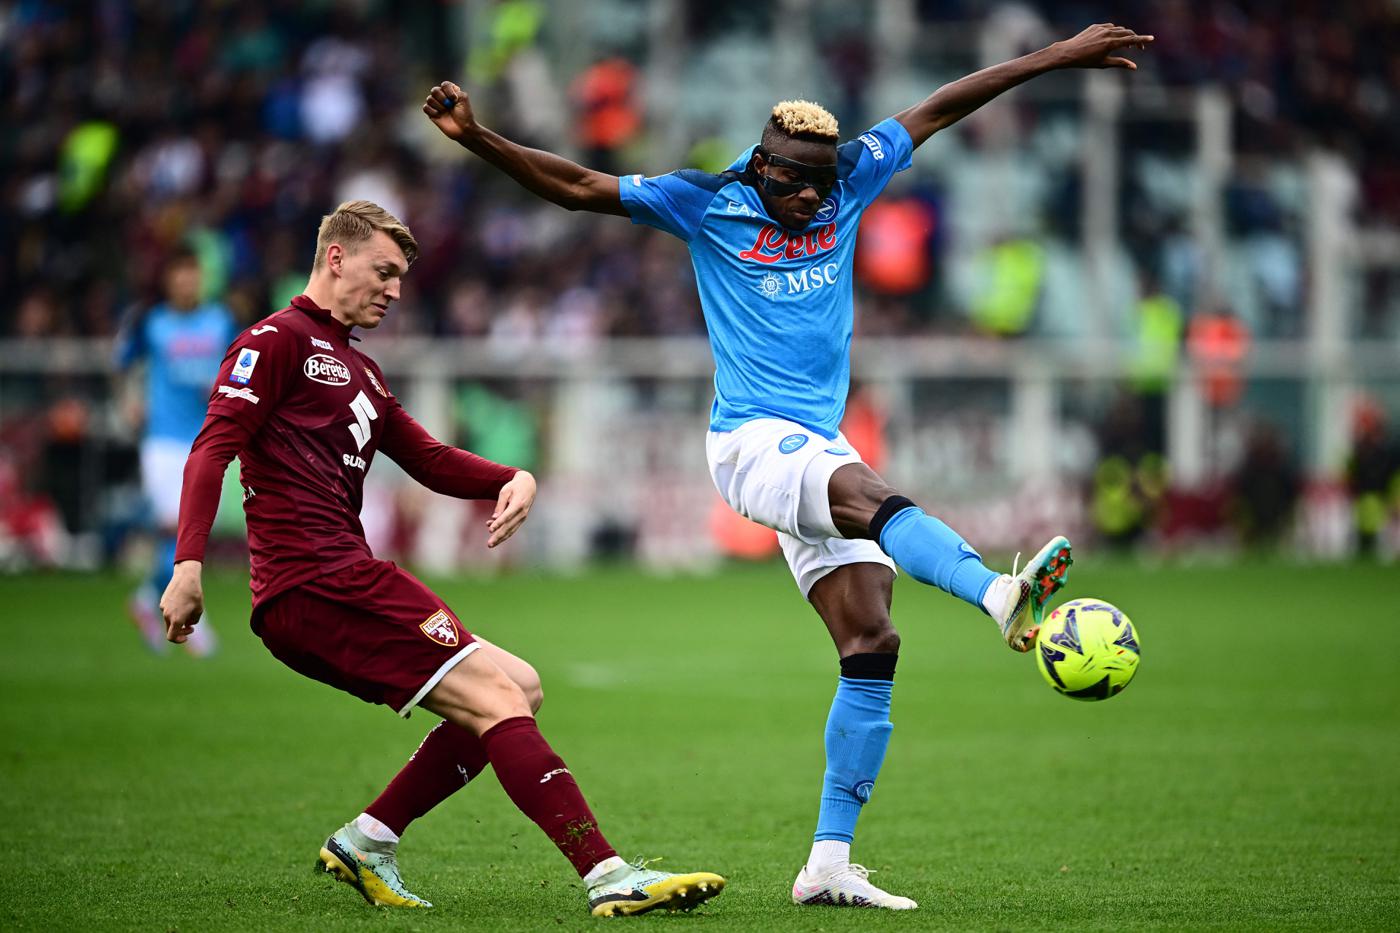 Torino - Napoli - 0:4. Italian Championship, round 27. Match review, statistics